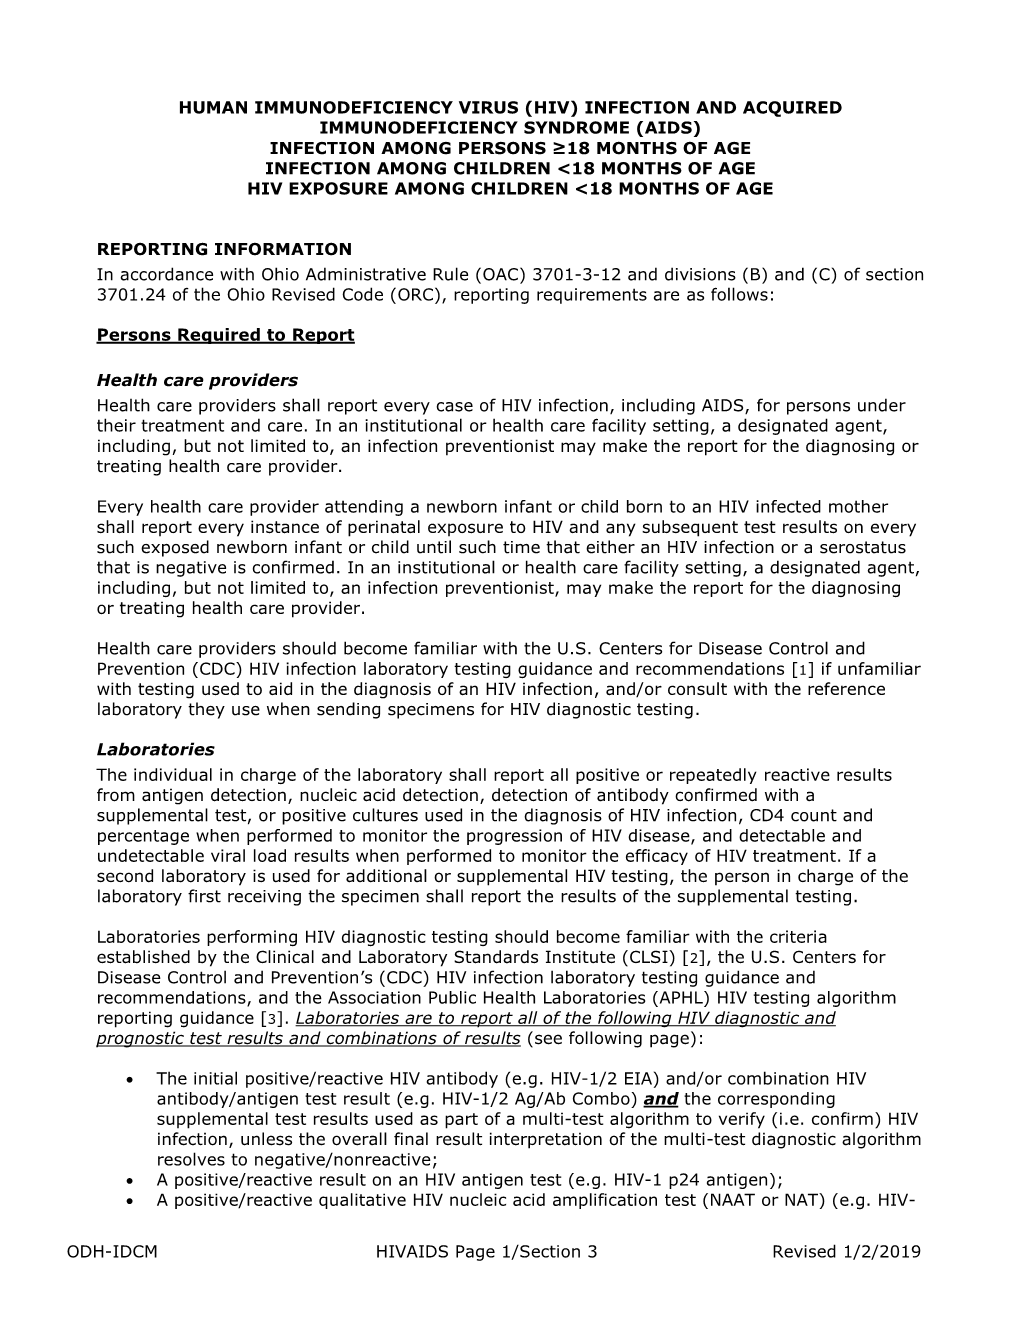 HIV/AIDS Confidential Case Report Form (CDC 50.42A, Rev